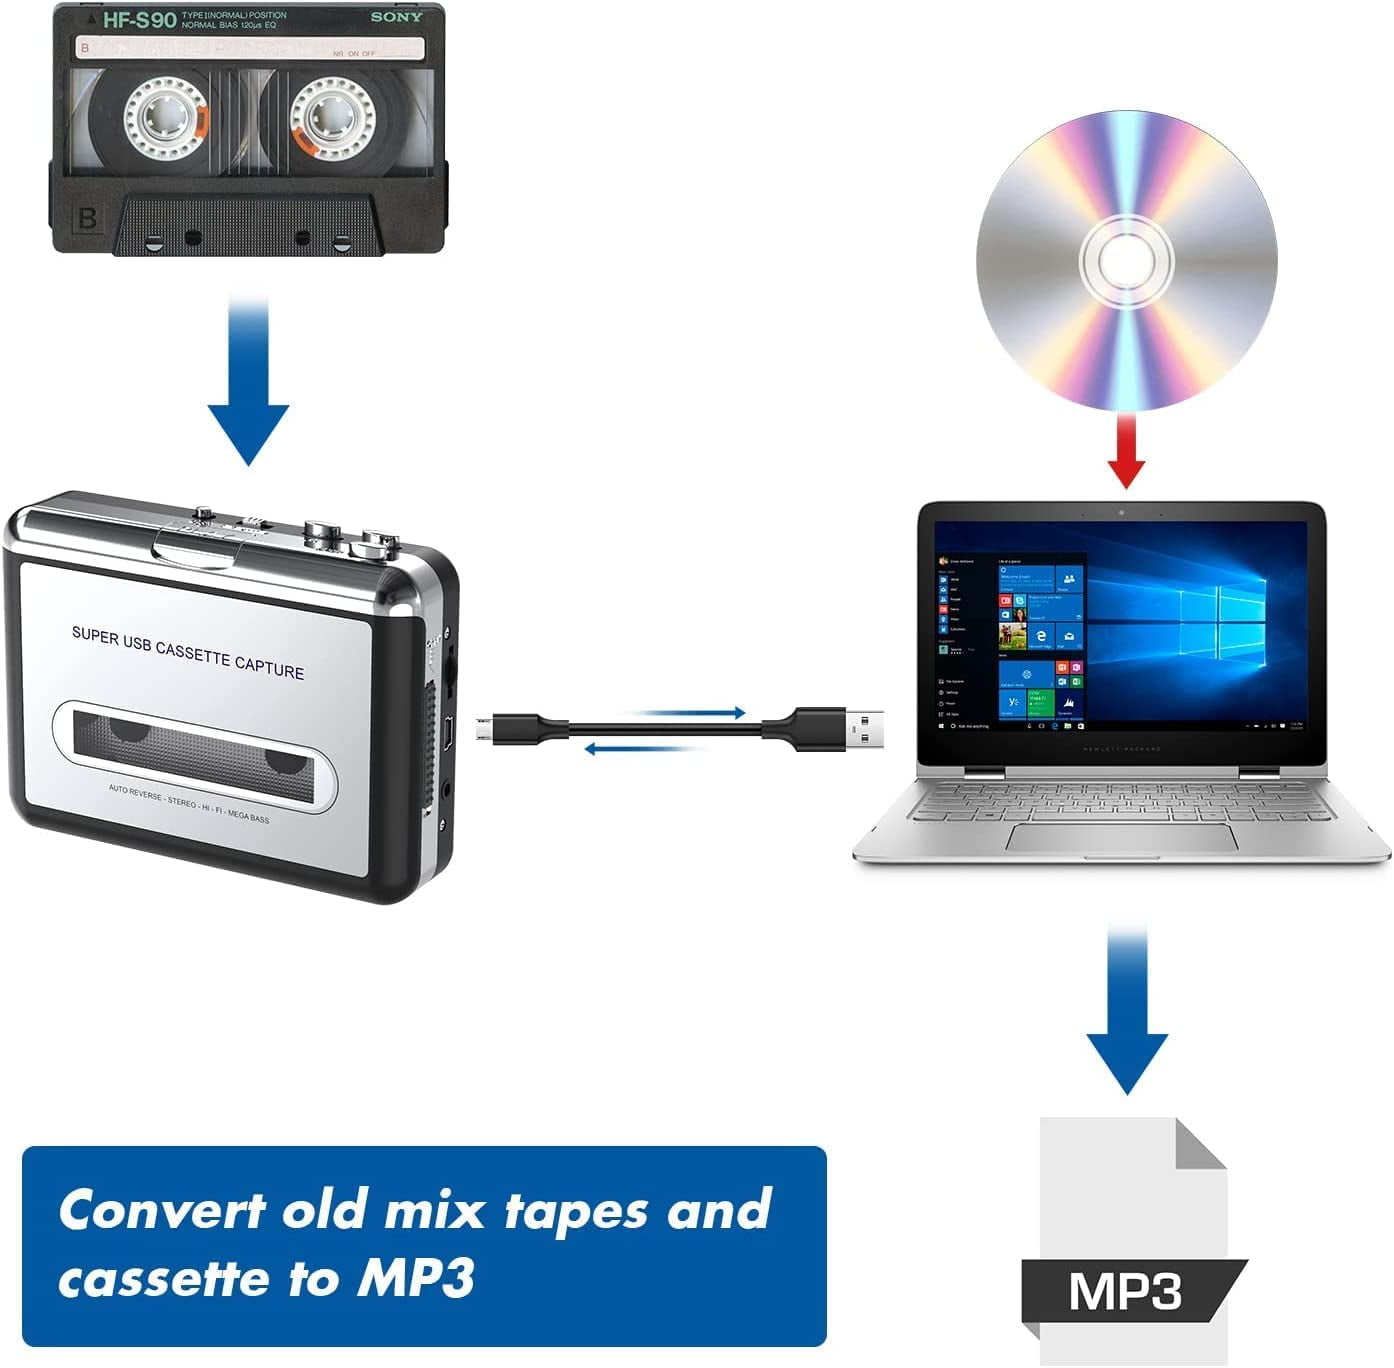 Universal - Portable MP3 Cassette Capture MP3 USB Ruban adhésif PC